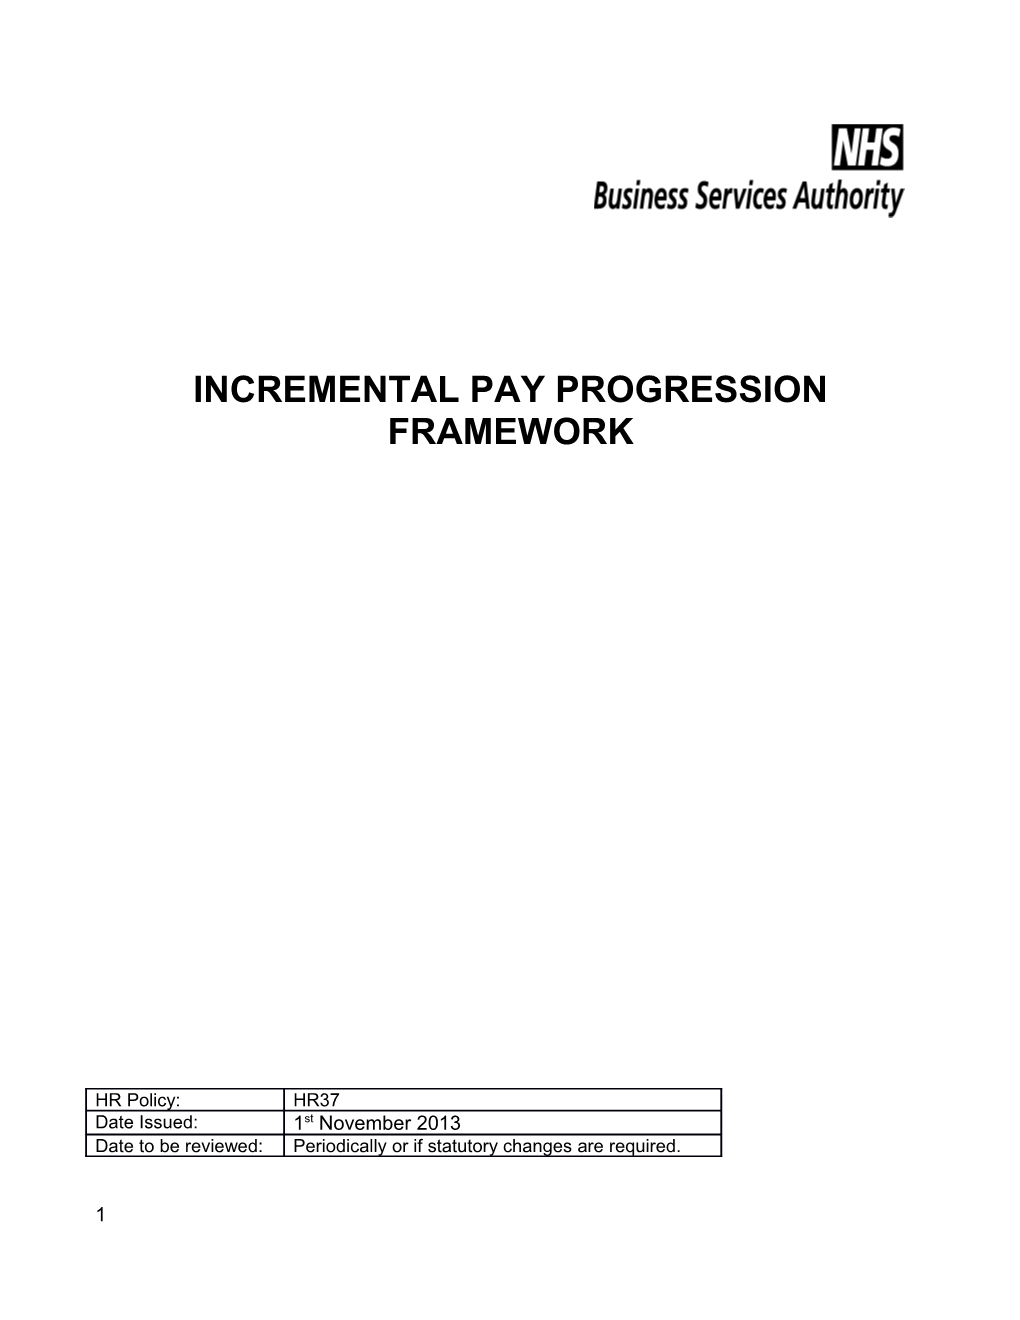 Incremental Pay Progression Framework